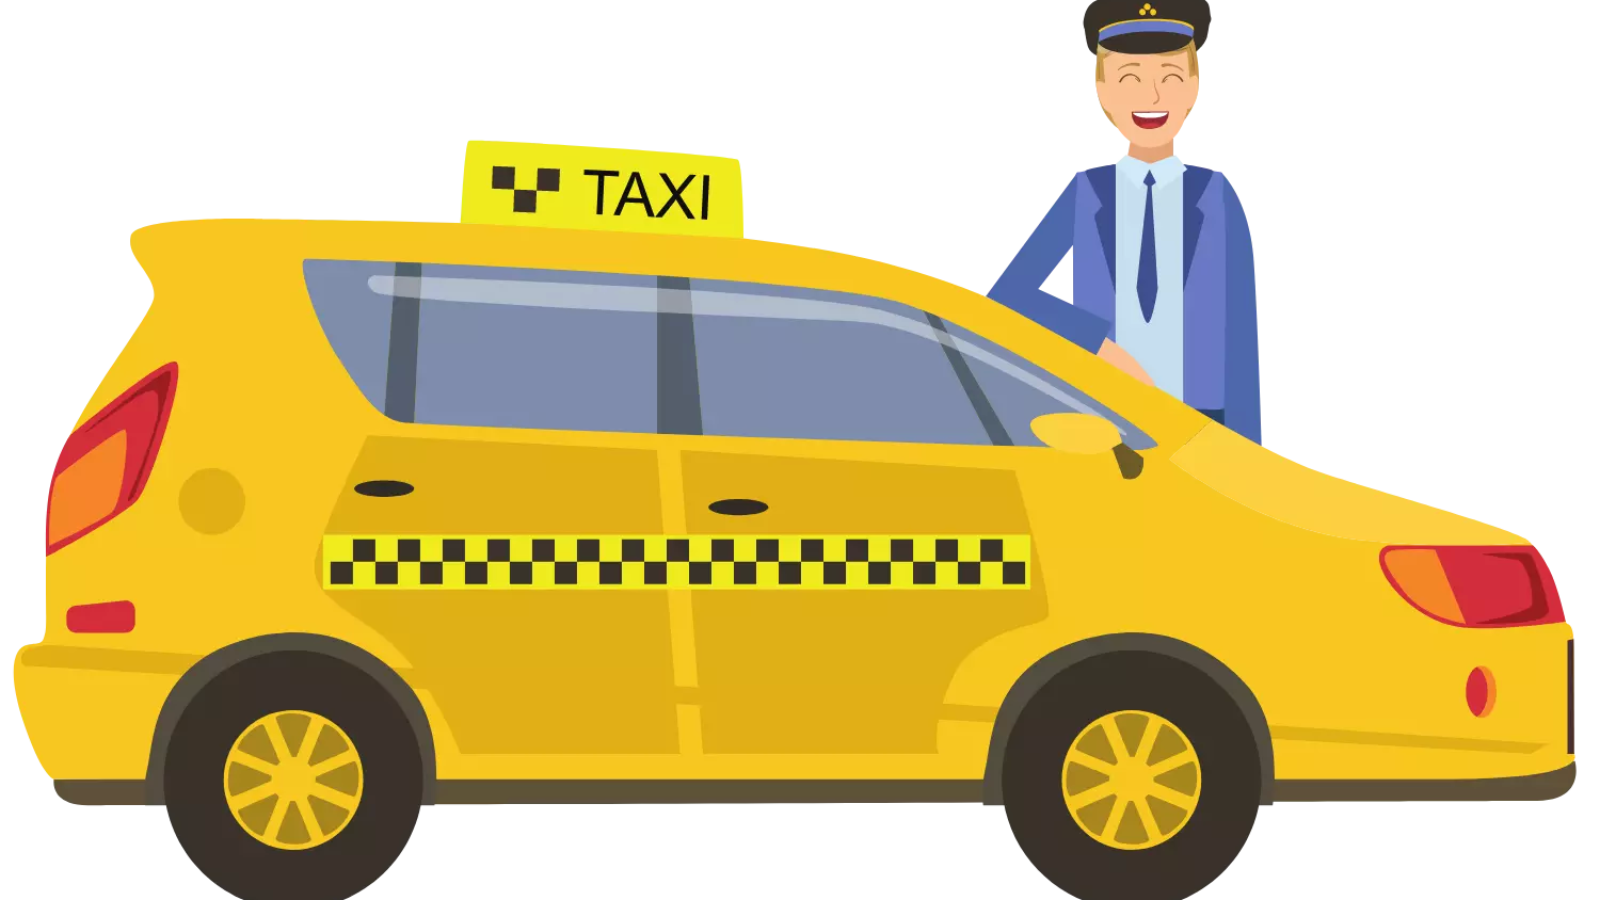 Cab services